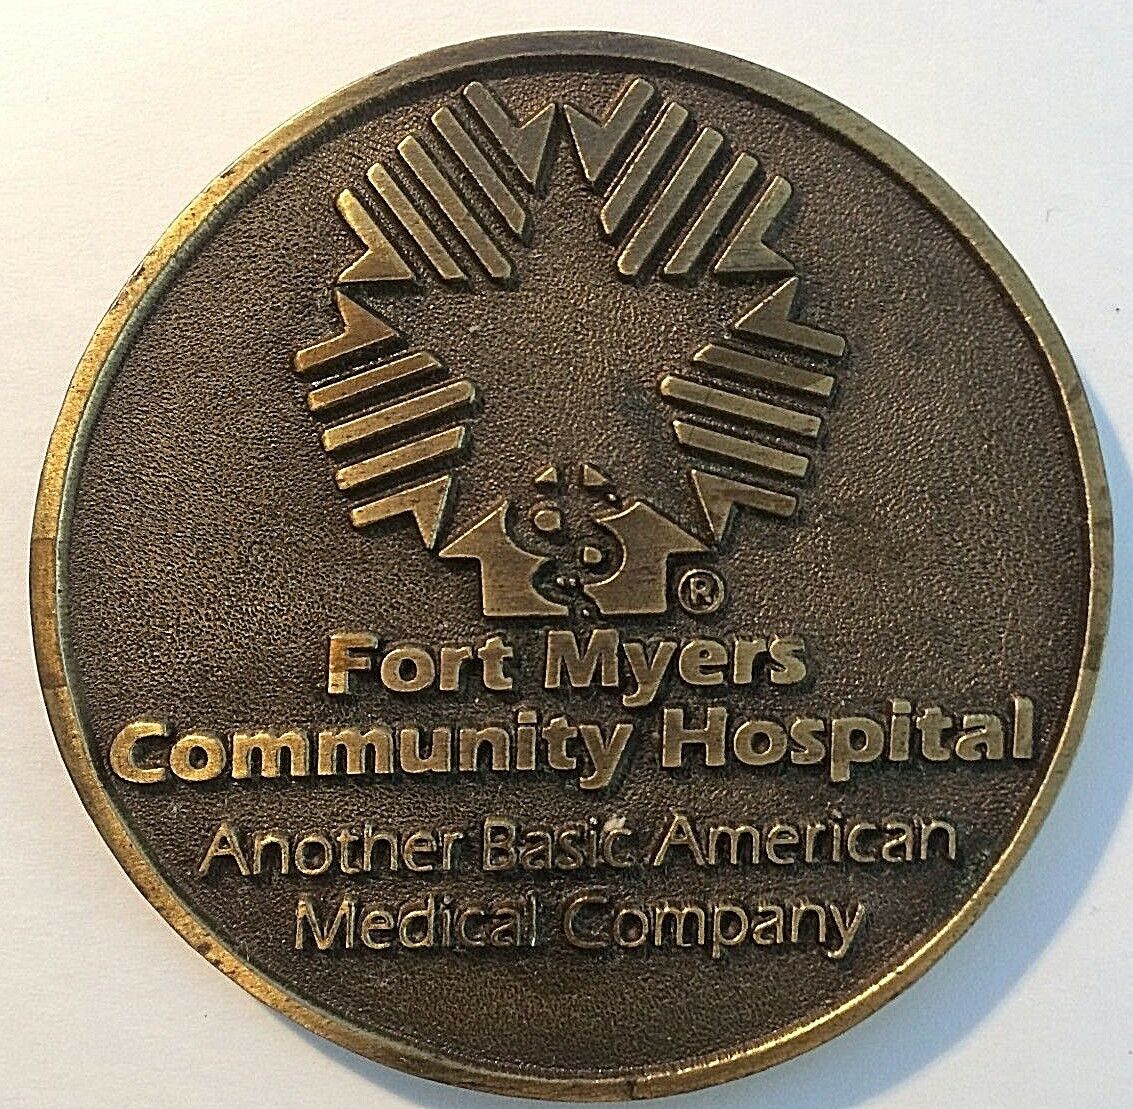 10th ANNIVERSARY 1974-1984 FT MYERS COMMUNITY HOSPITAL HUGE (3.5") BRONZE MEDAL